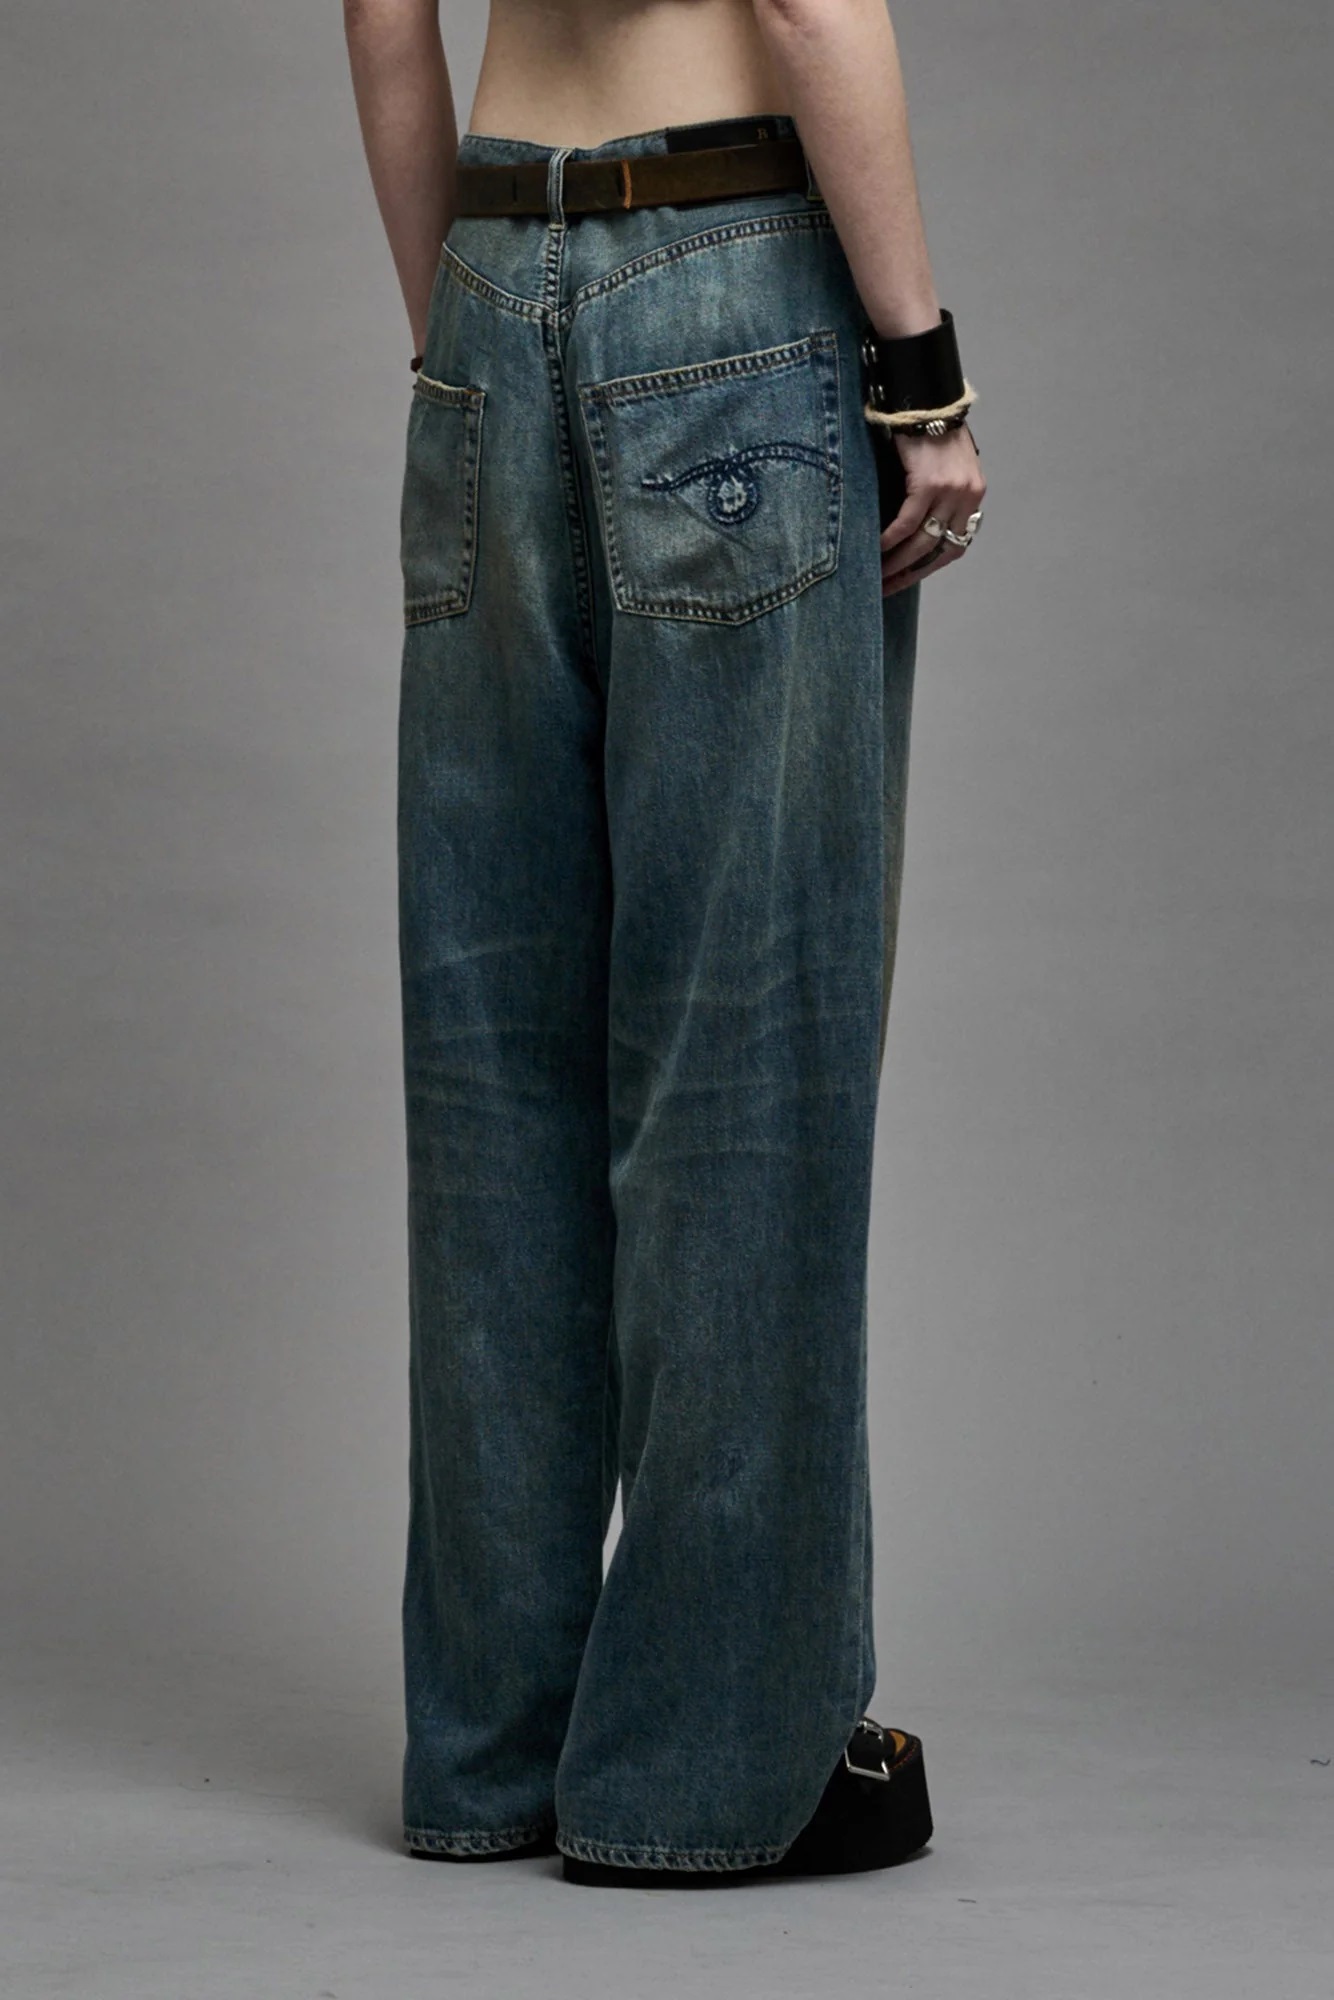 R13 Boyfriend Venti Jeans in Weber Linen Indigo 24